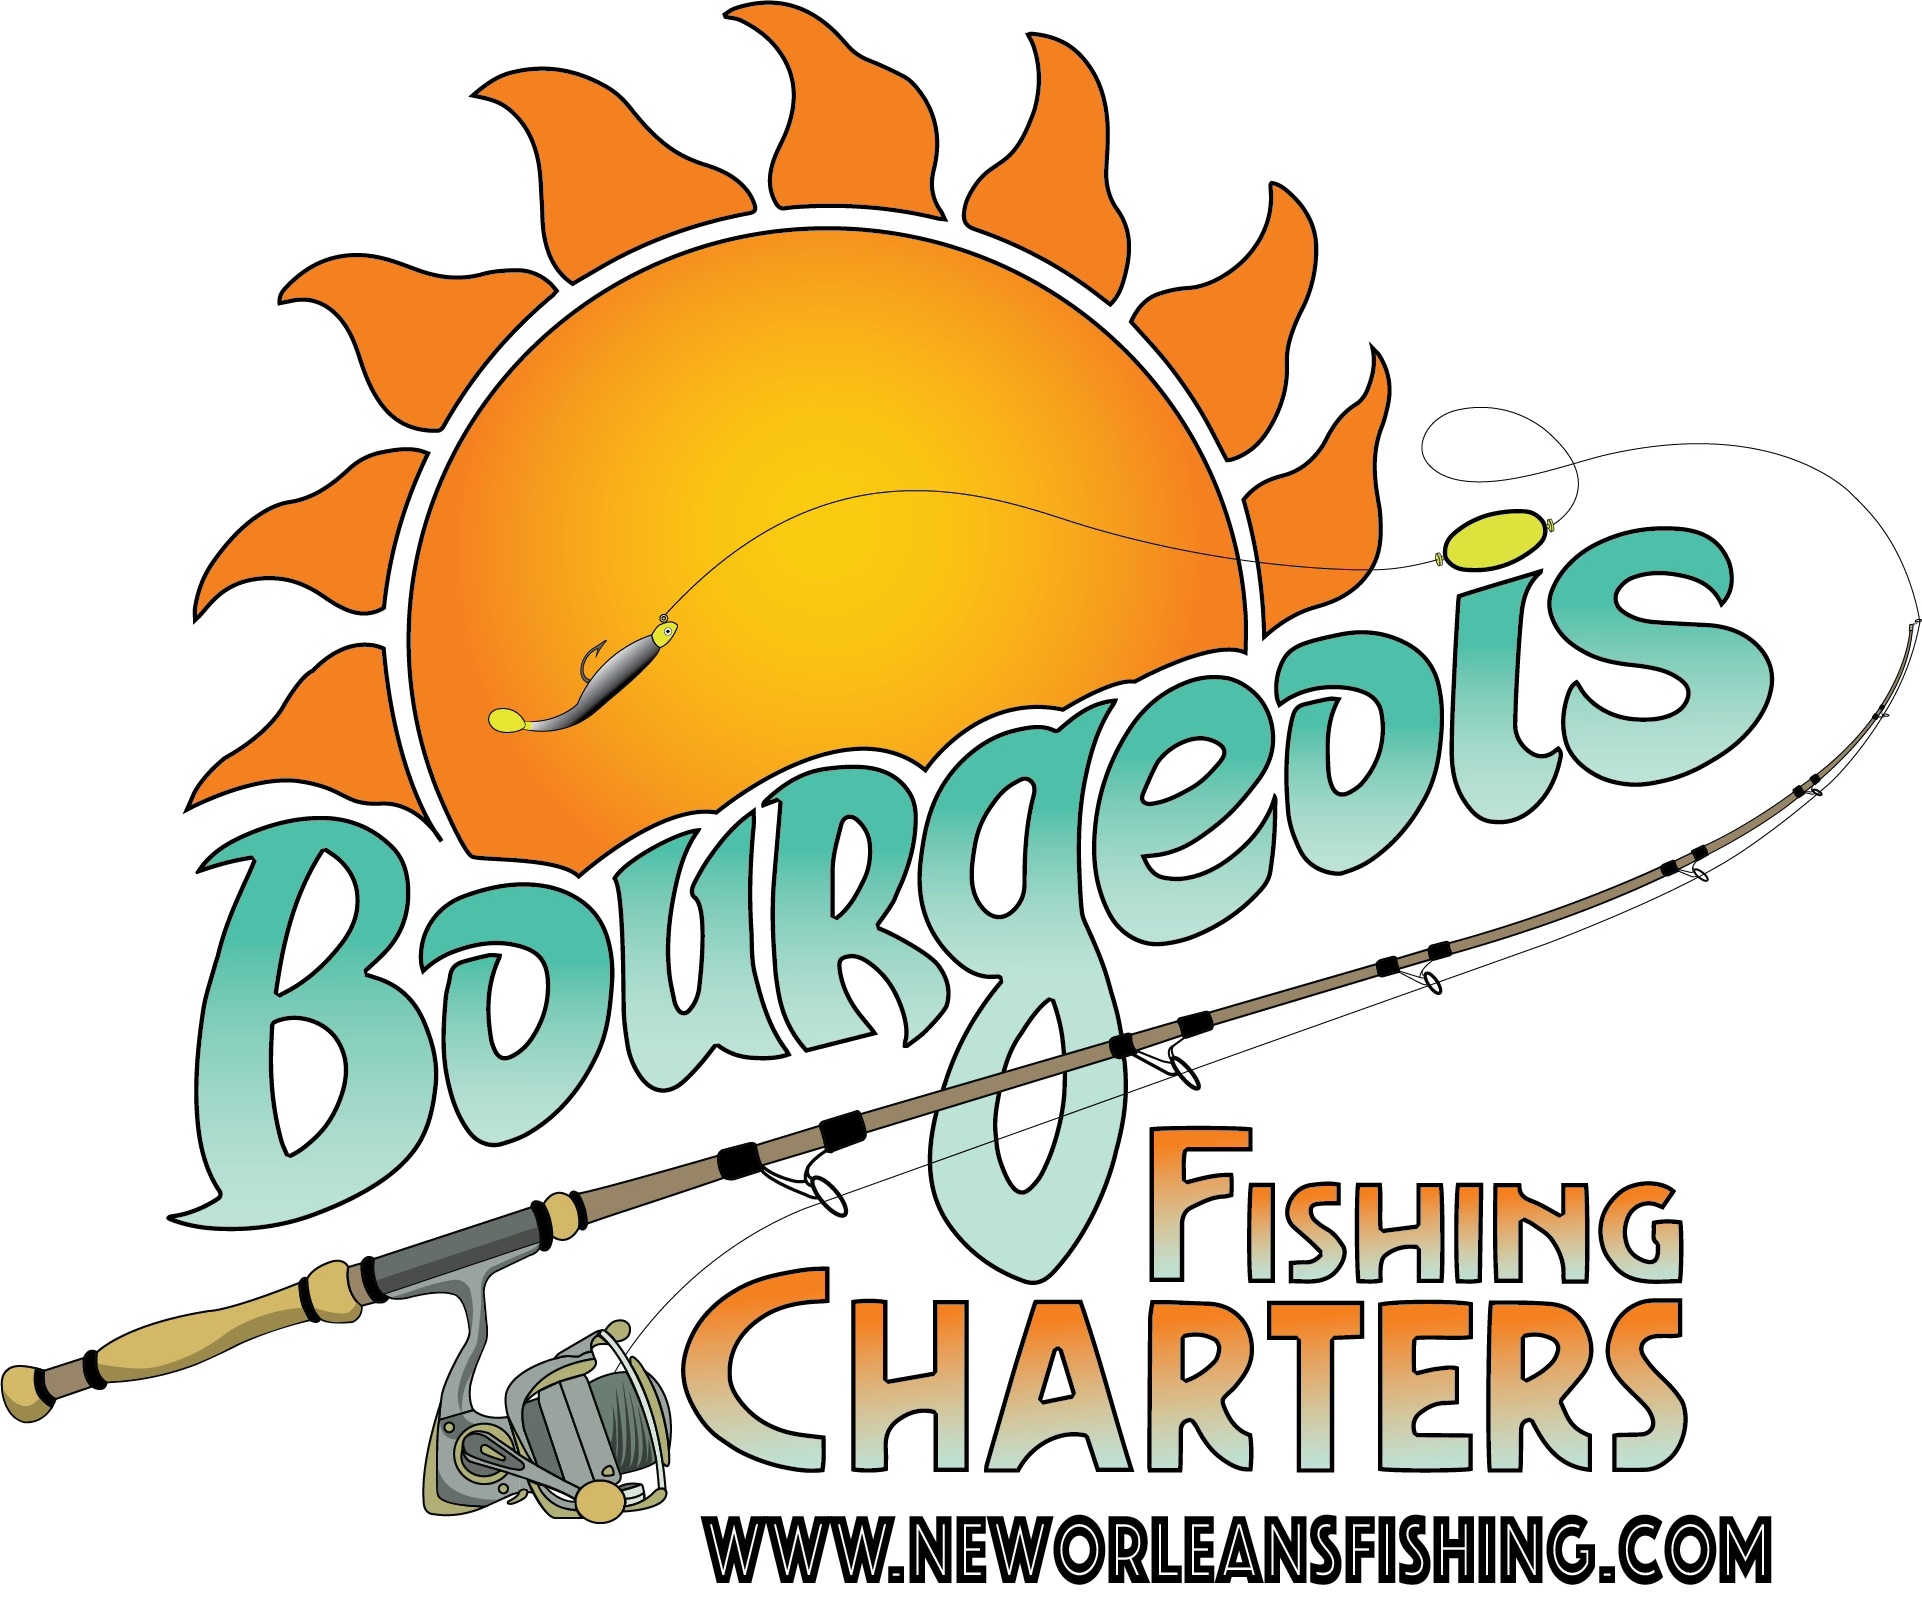 Bourgeois Fishing Charters